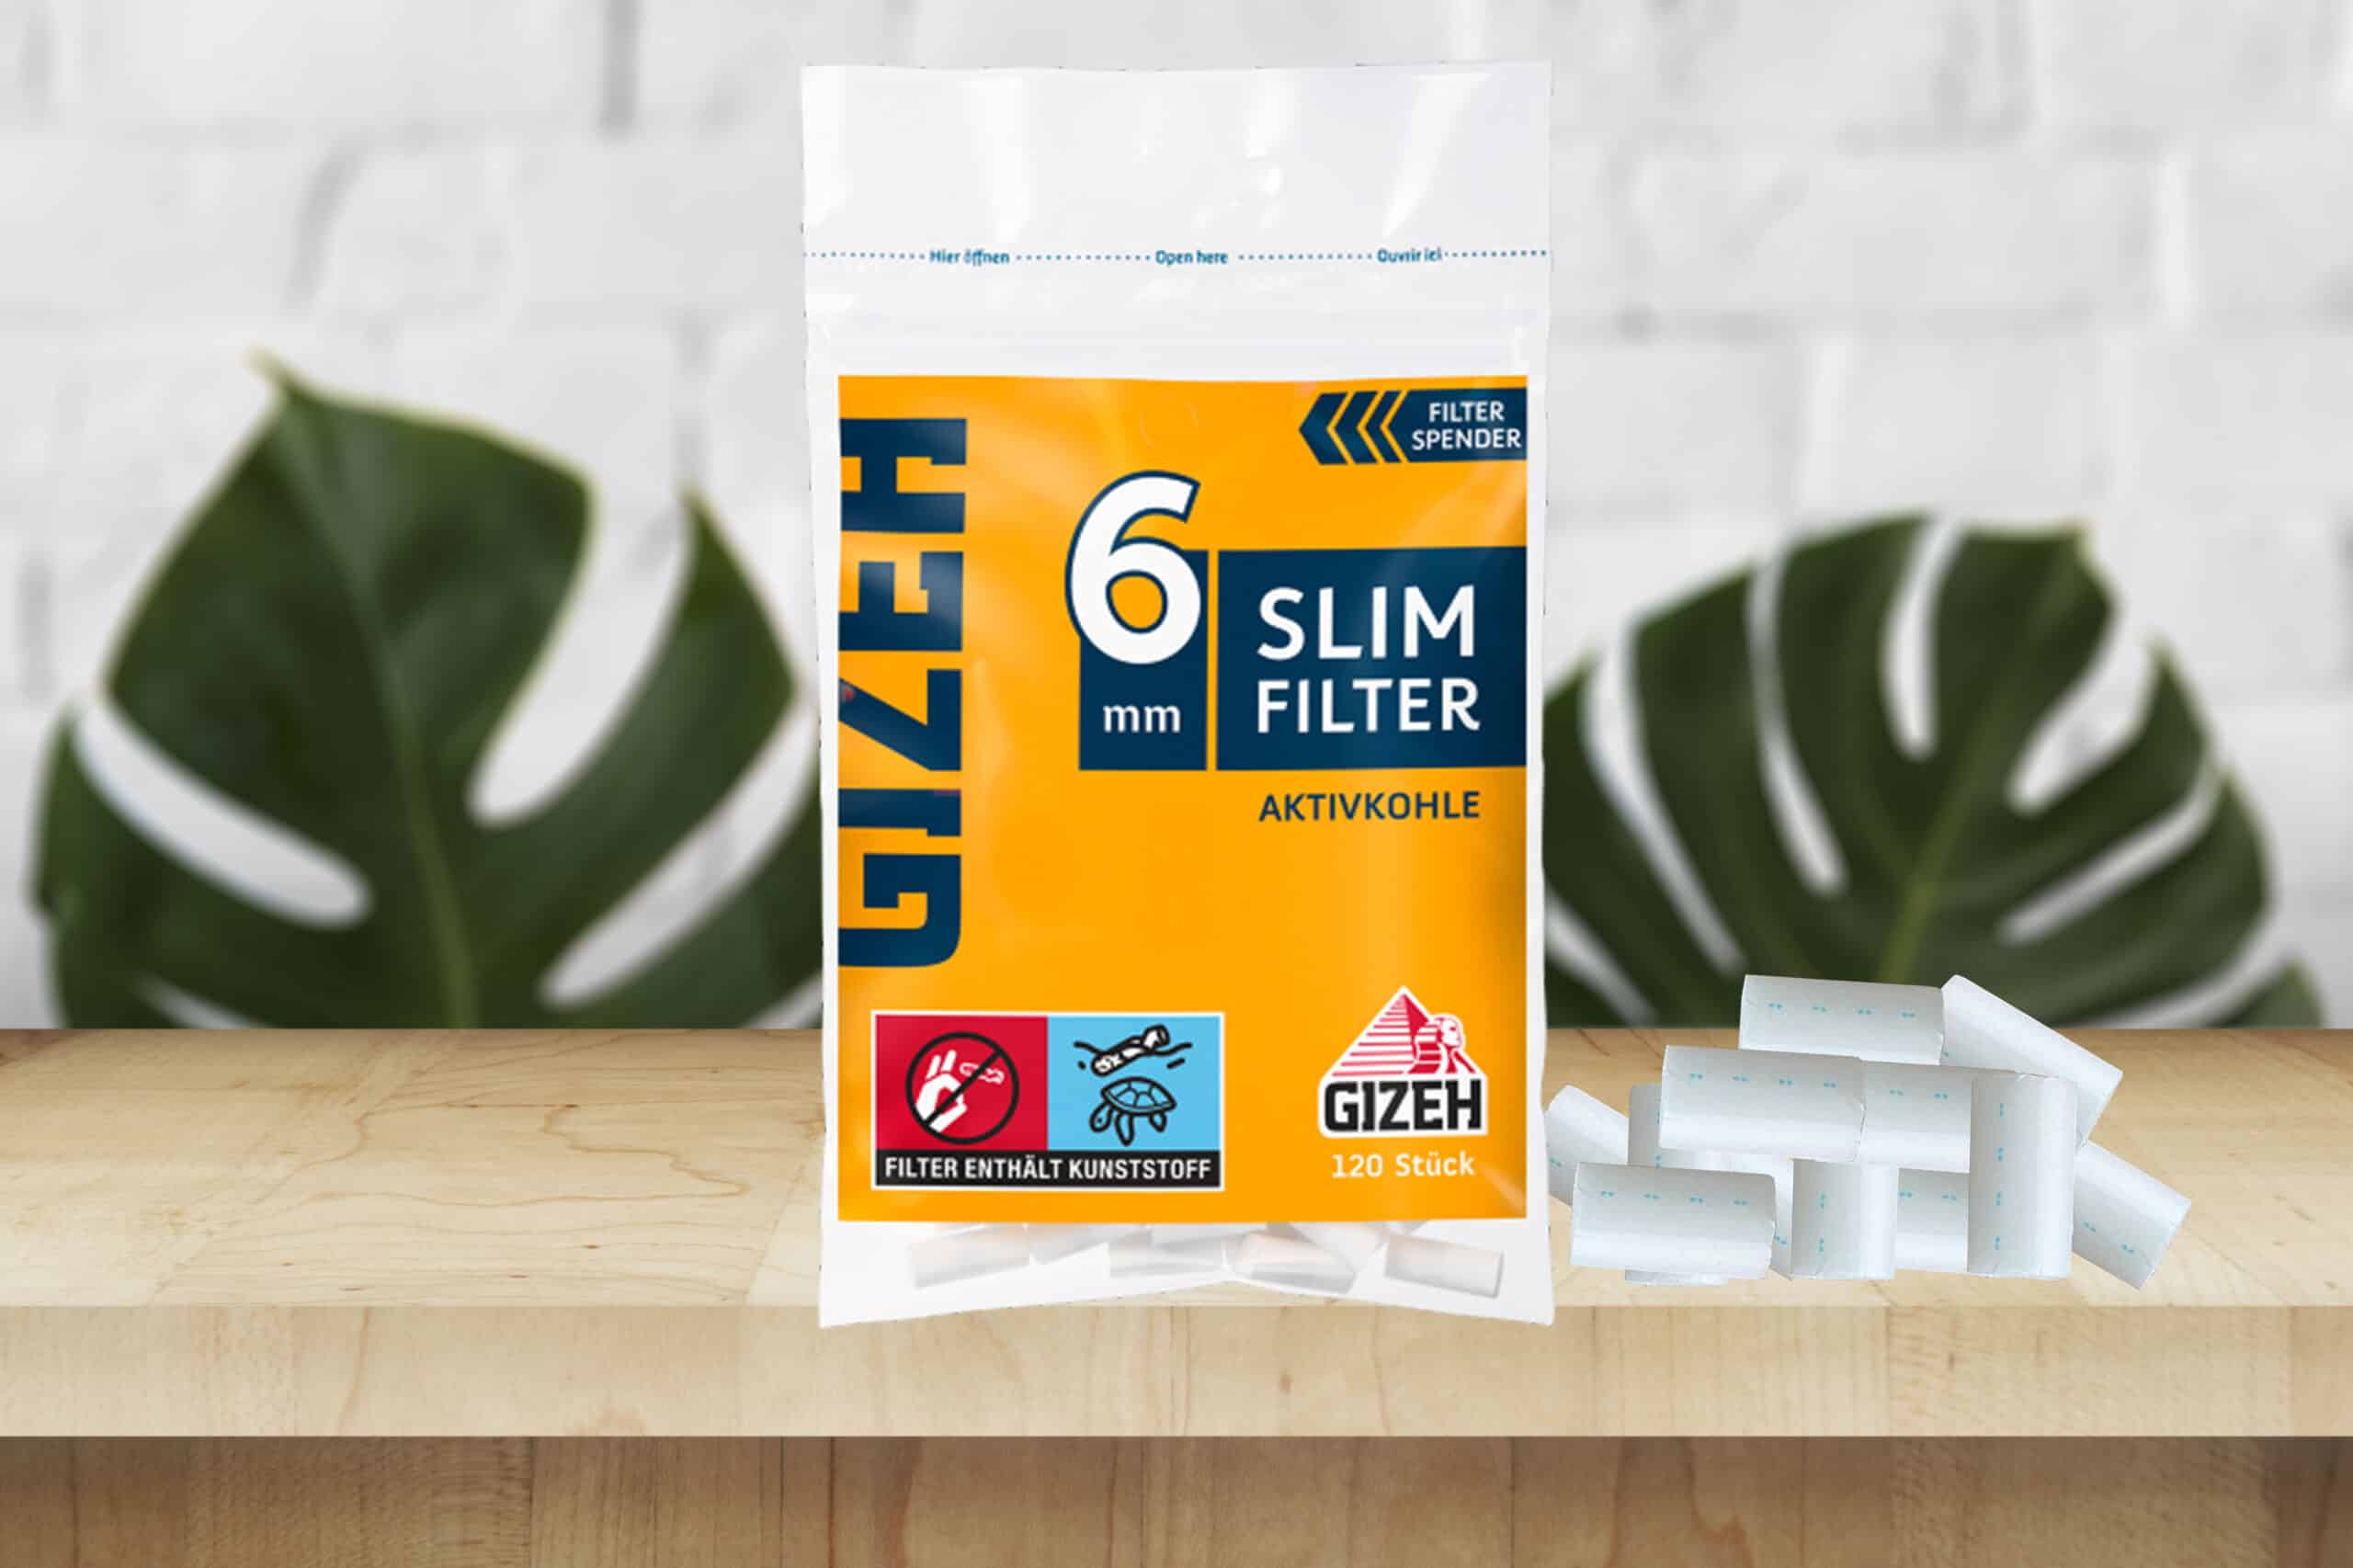 Gizeh Slim Filter mit Aktivkohle 1x120 6mm Filter